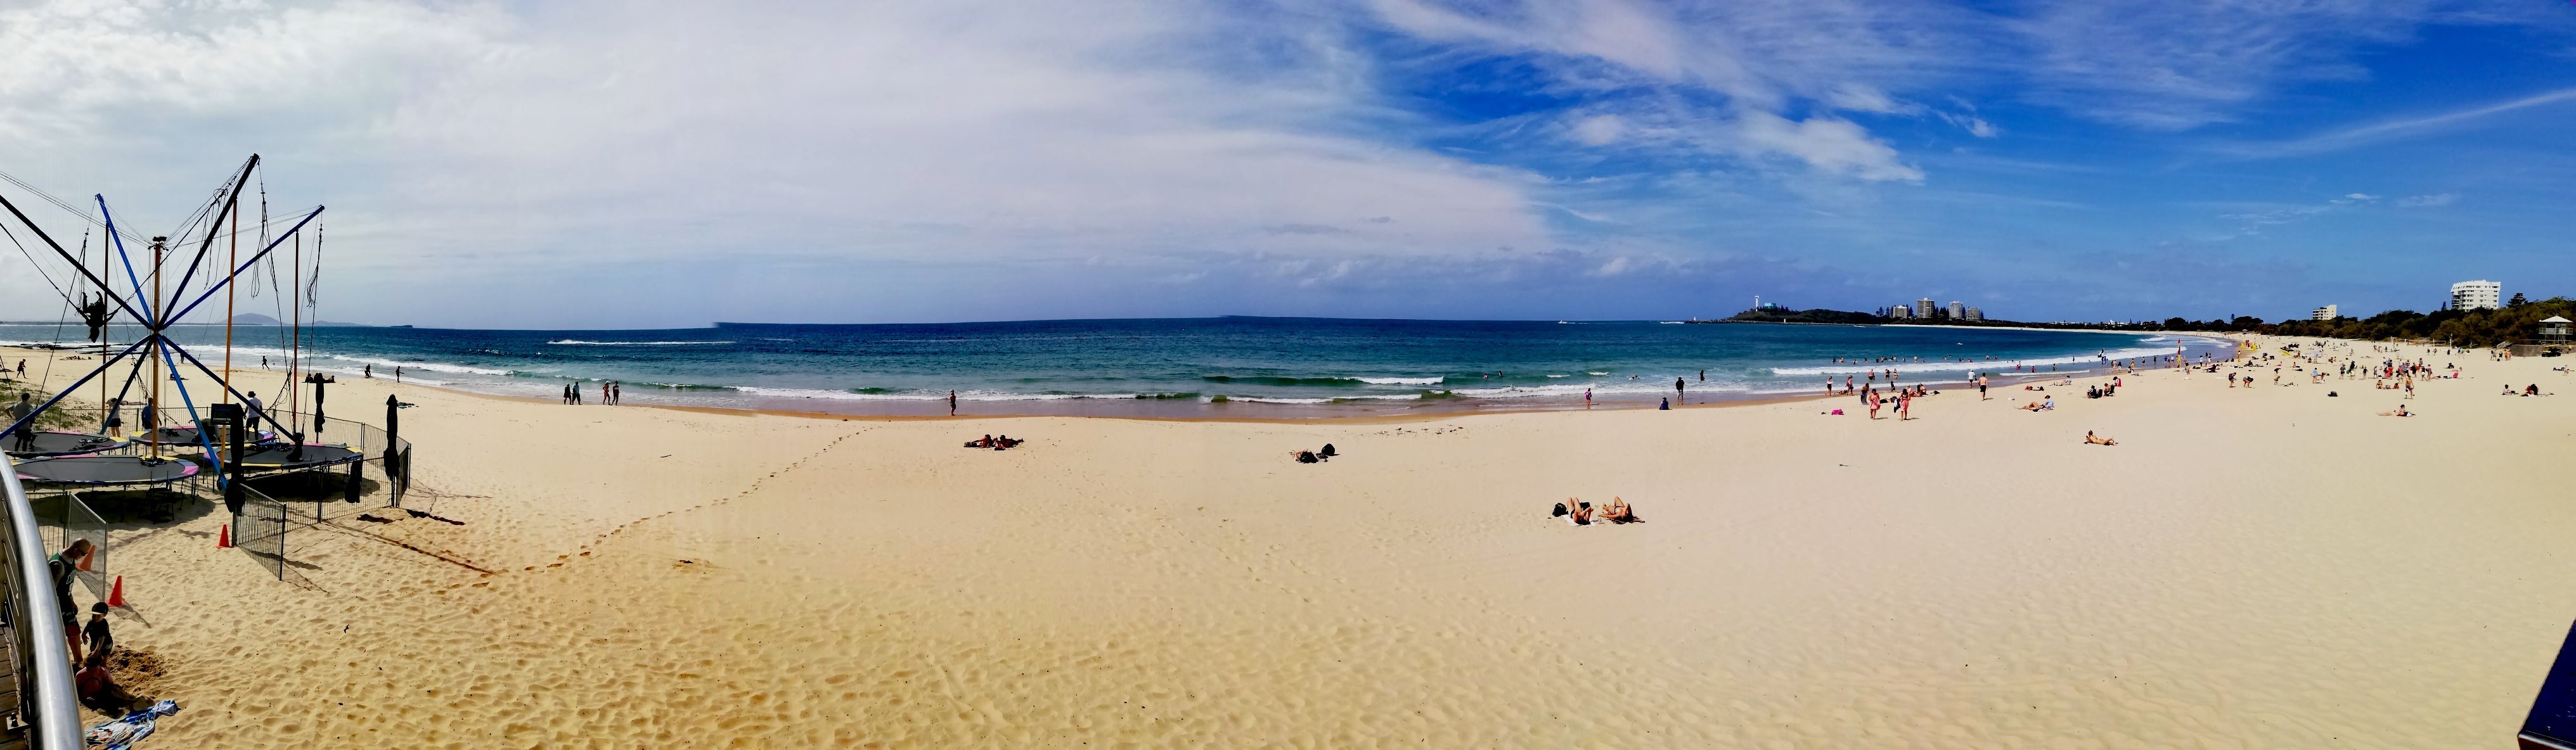 Mooloolaba Beach, Sunshine Coast, Australia